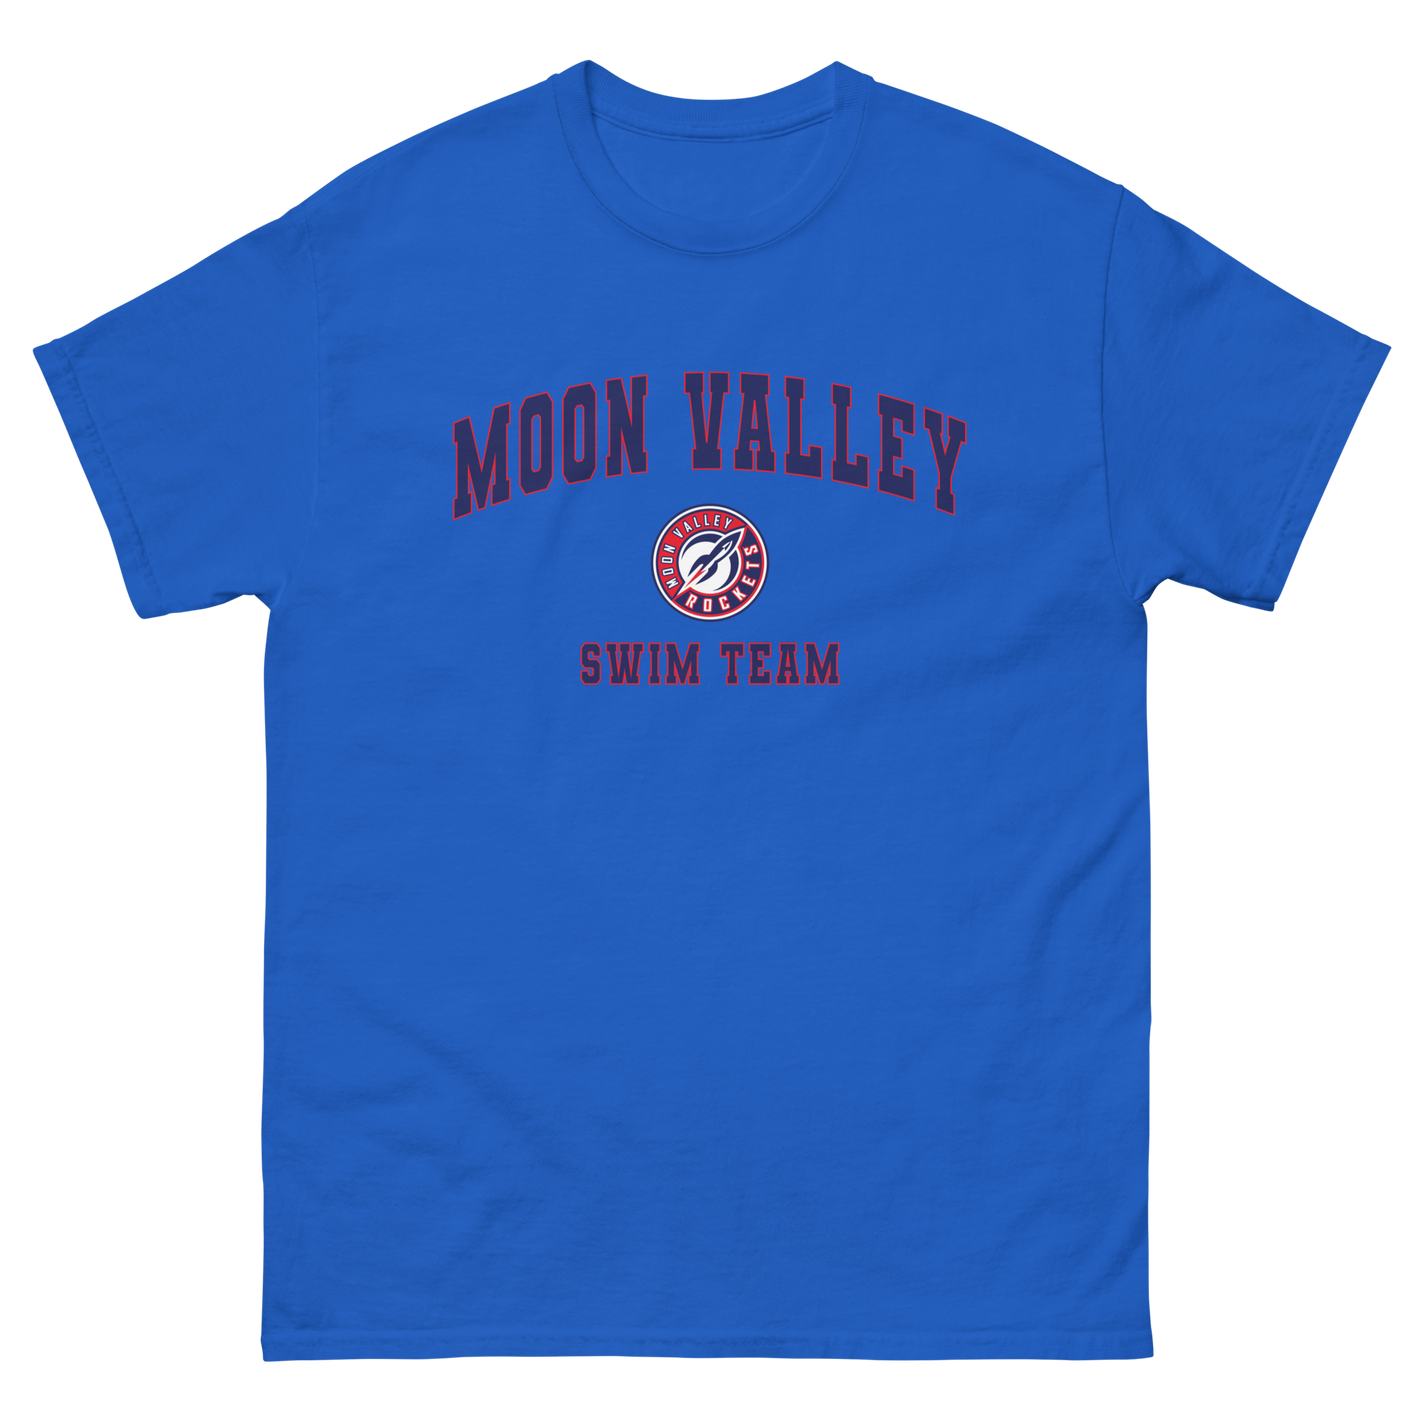 Moon valley Swim Men's classic tee